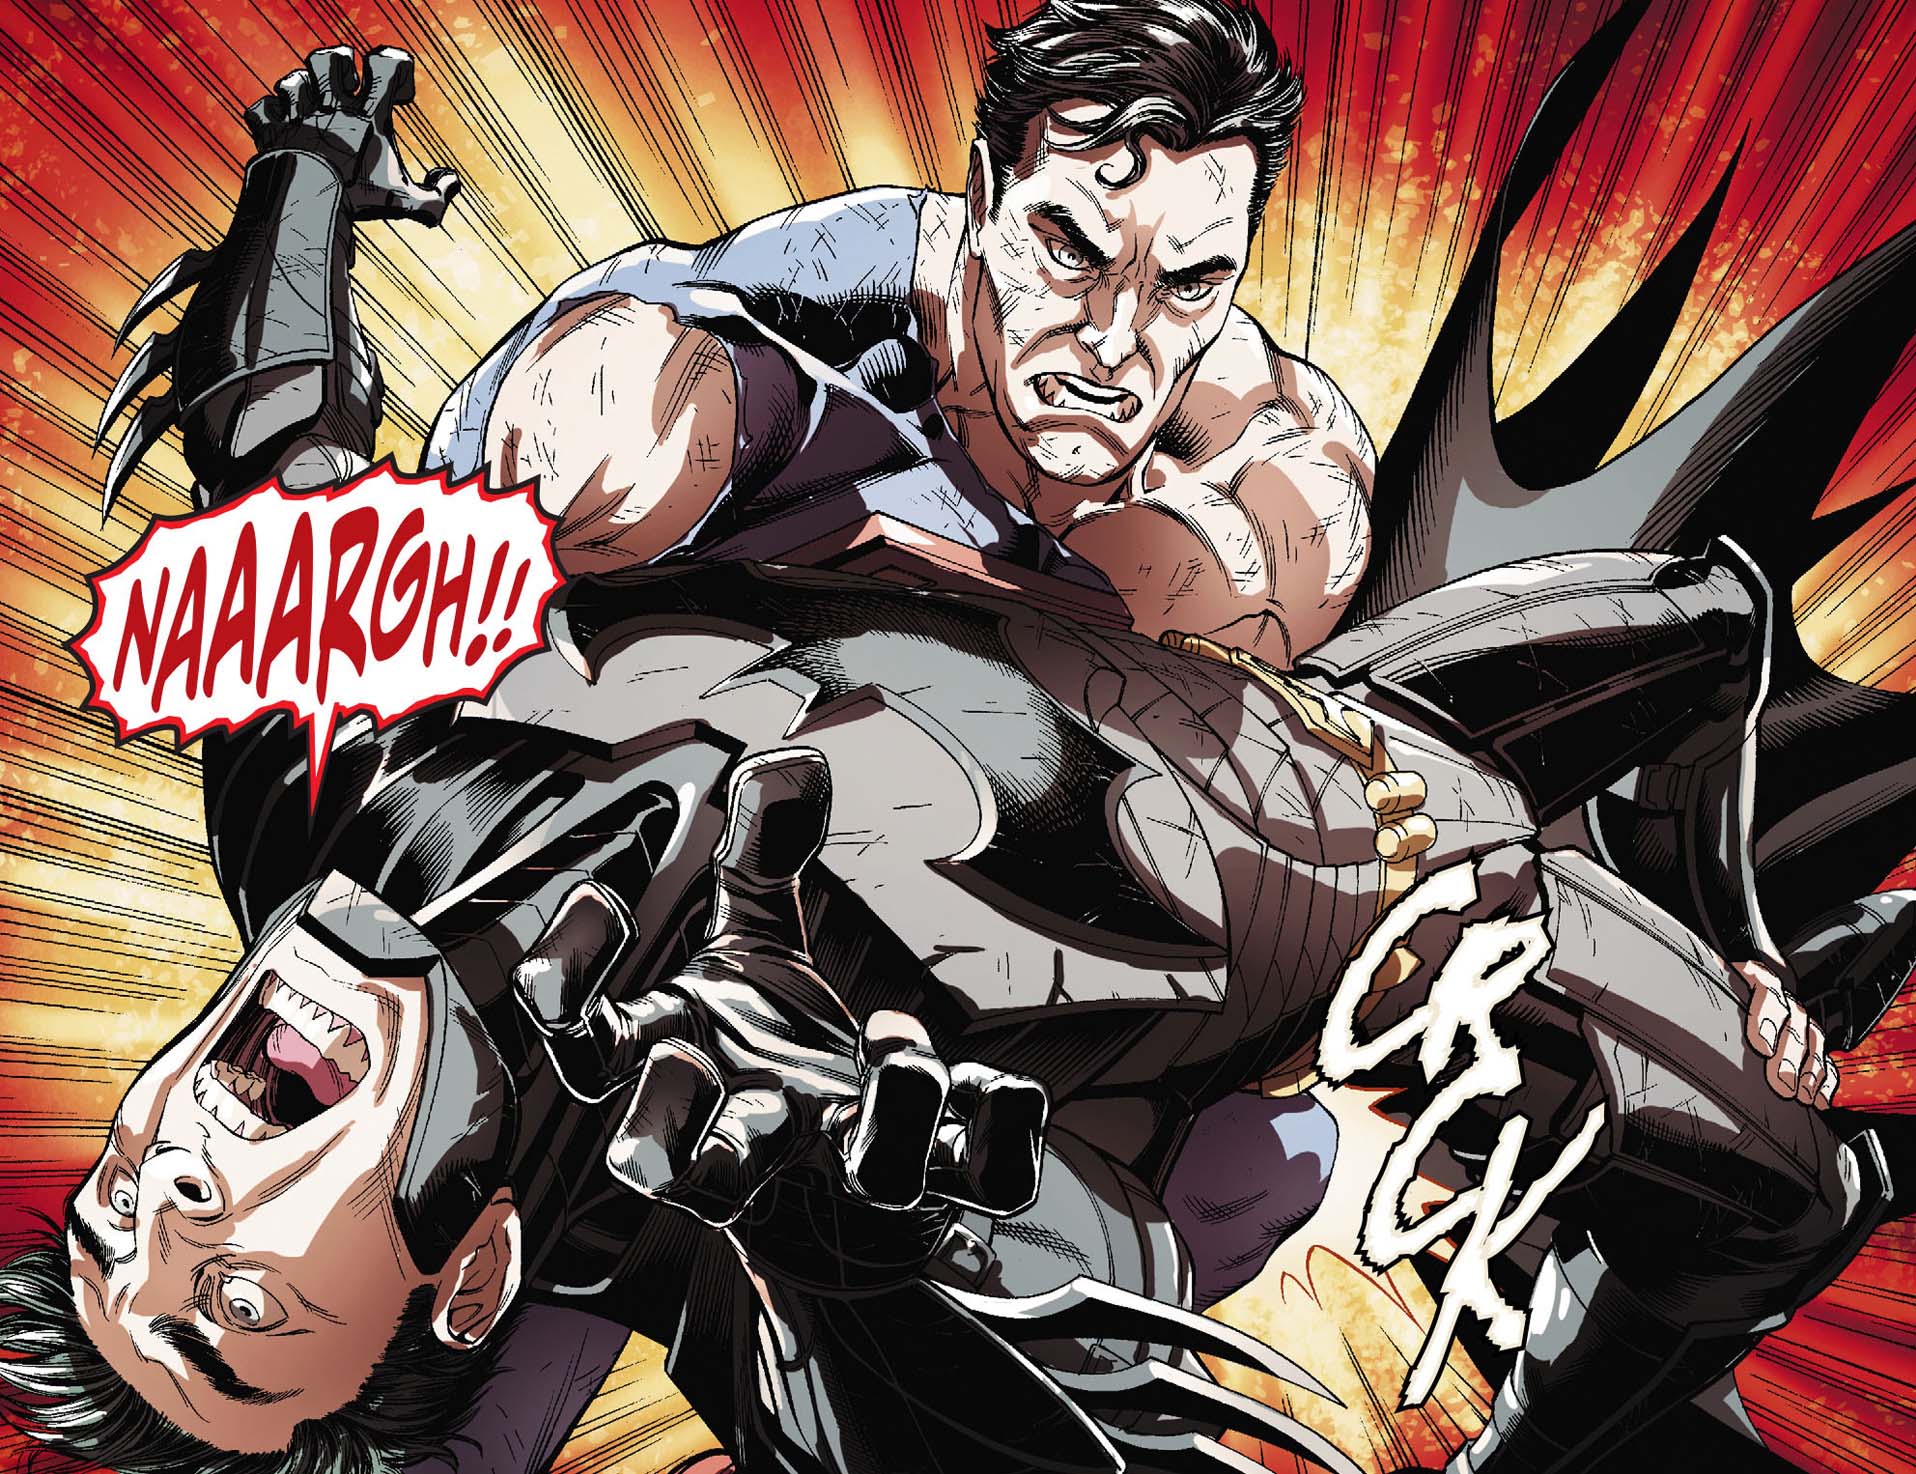 Injustice Gods Among Us Year One Volume 2 superman breaks batman's back